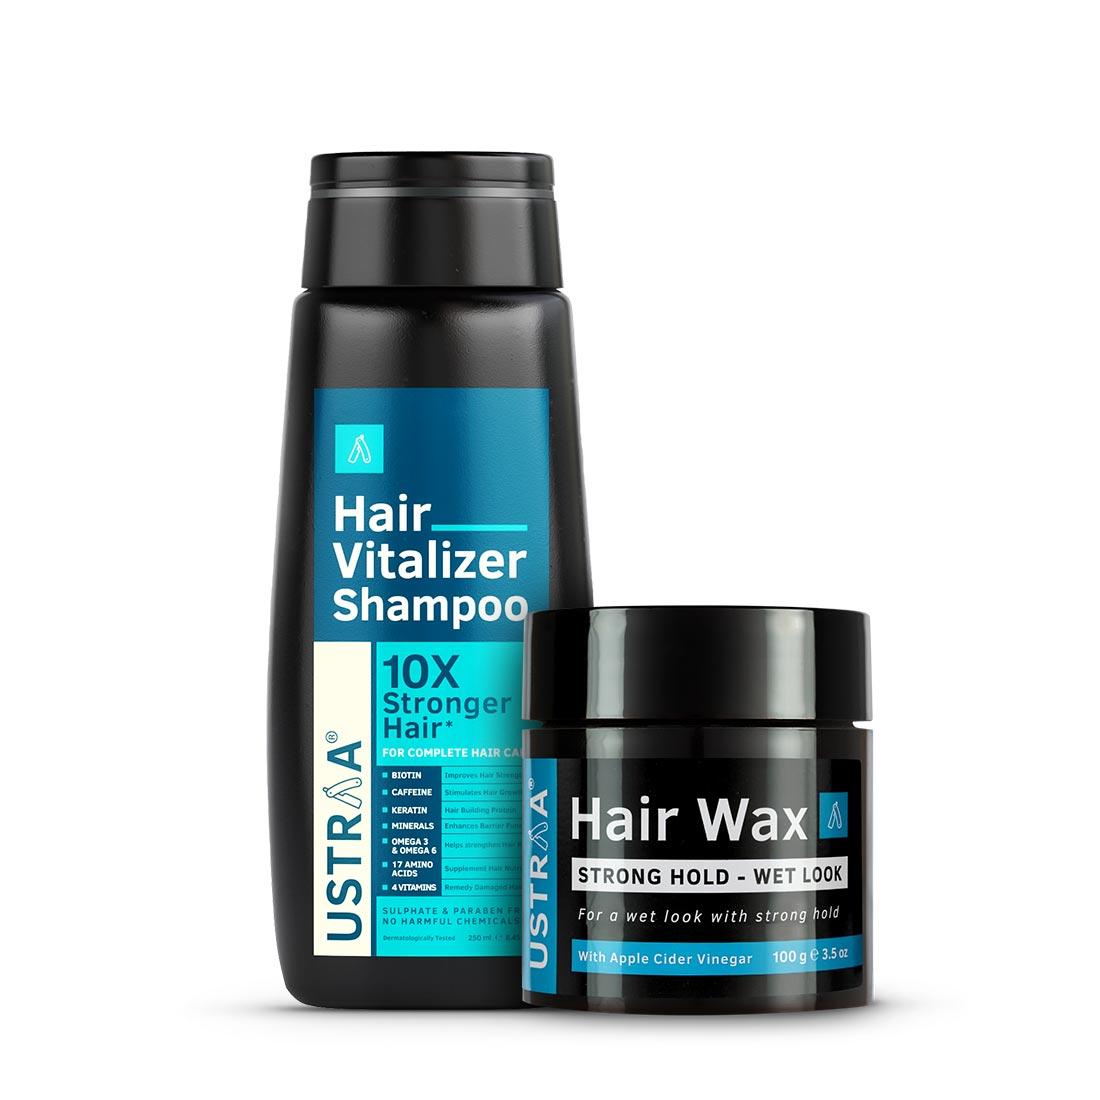 Hair Vitalizer Shampoo & Hair Wax Wet Look